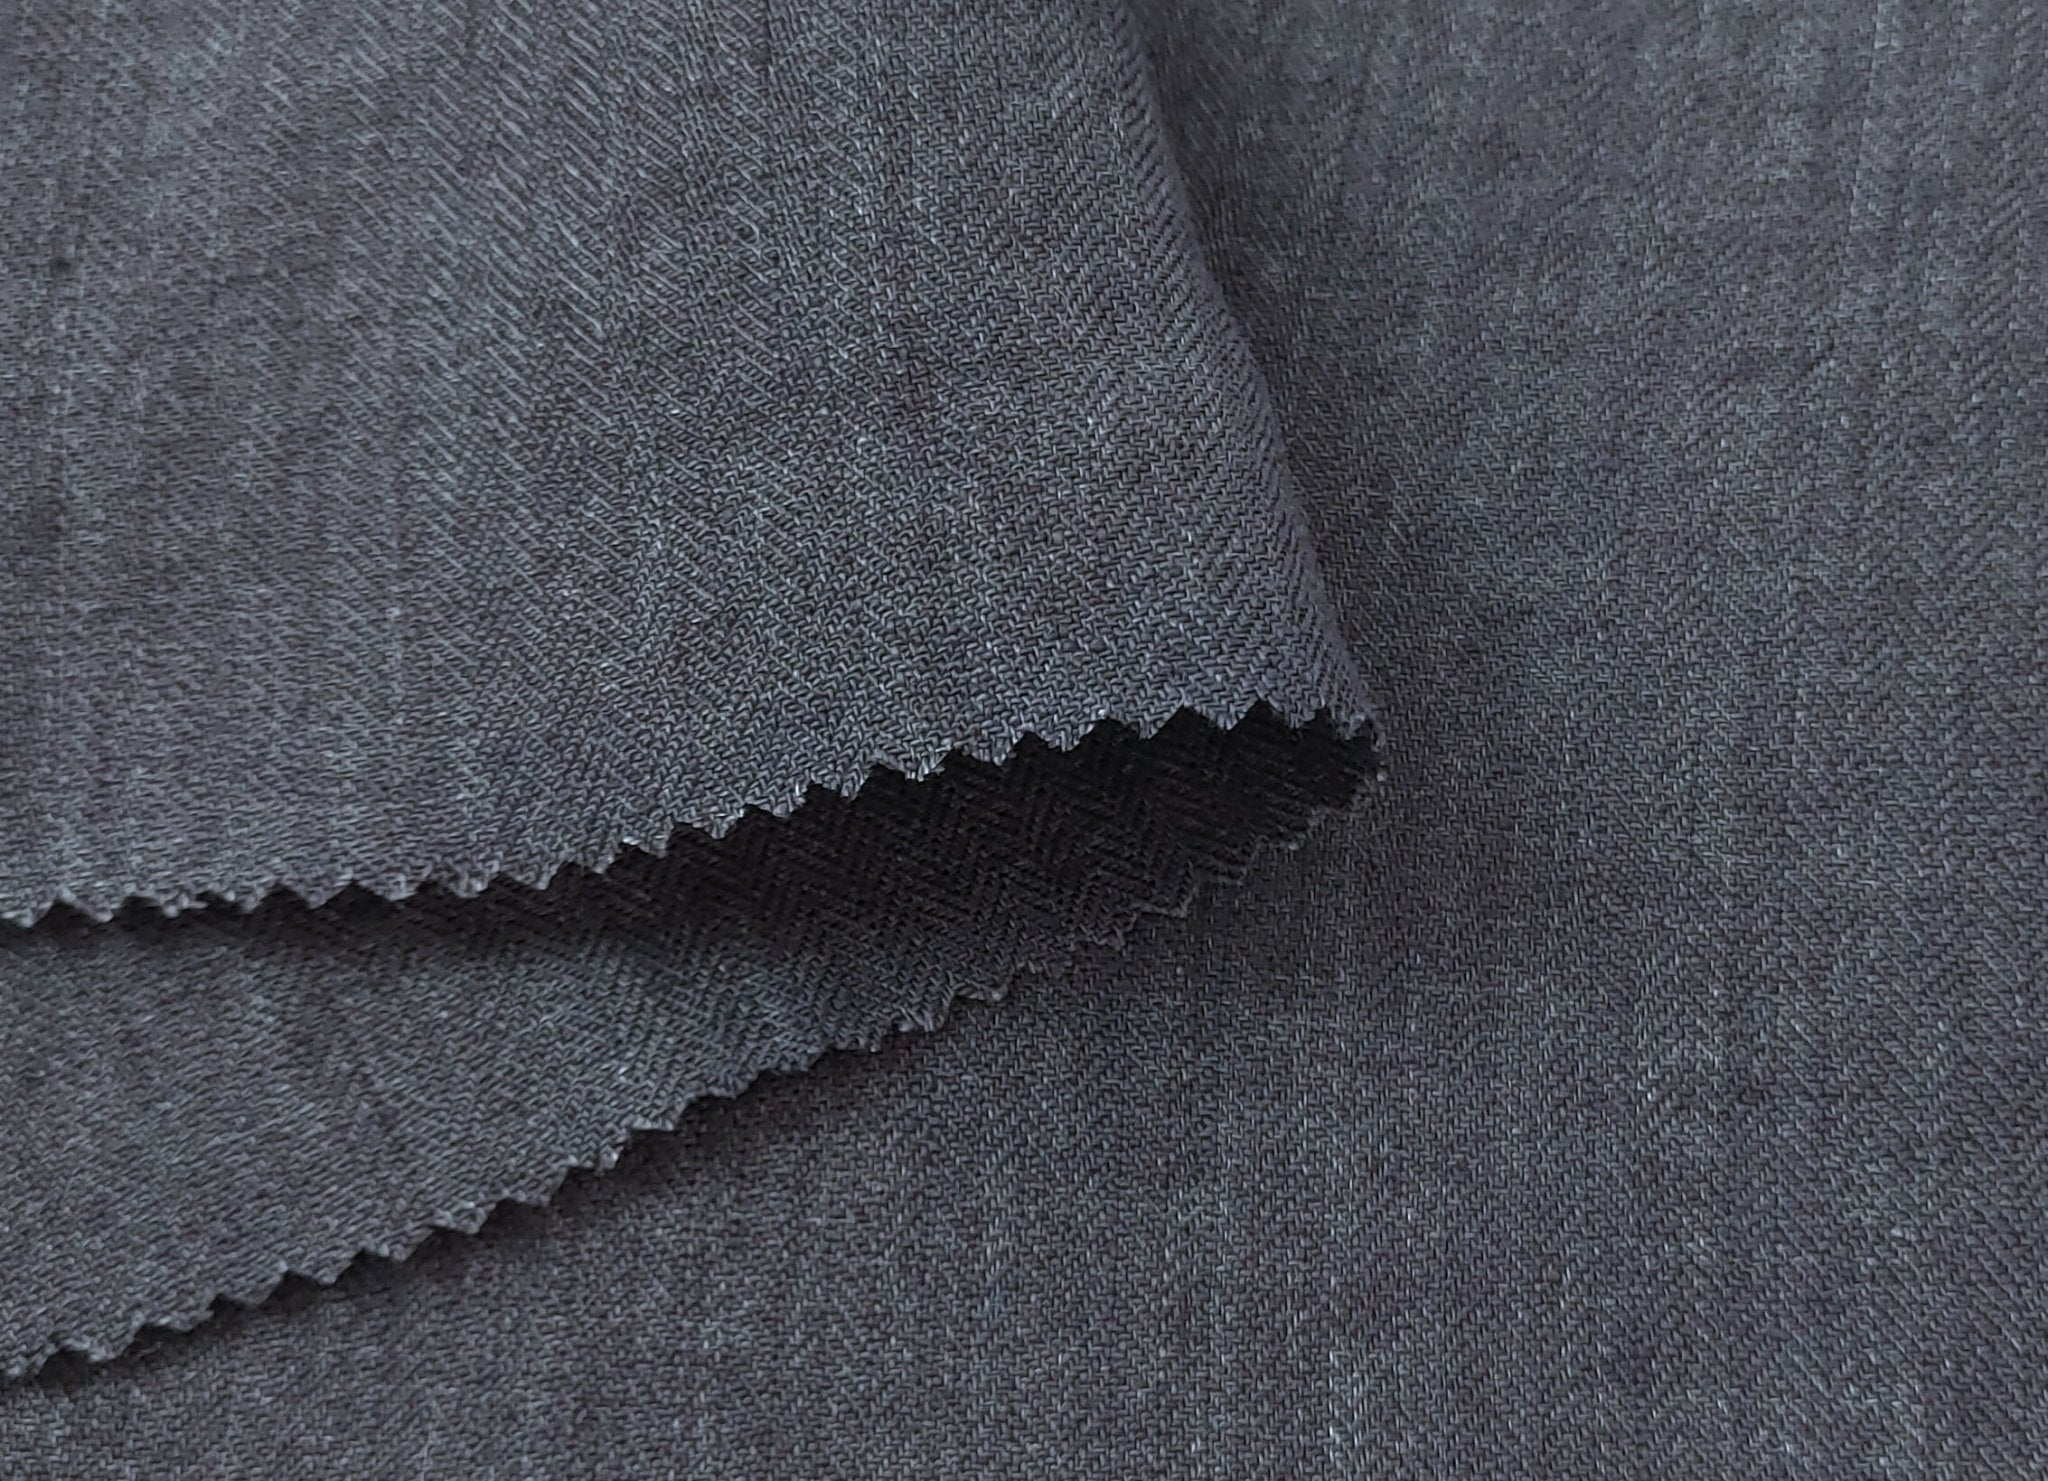 100% Linen Small Herringbone Twill Fabric HBT Chambray 7309 7605 - The Linen Lab - Beige